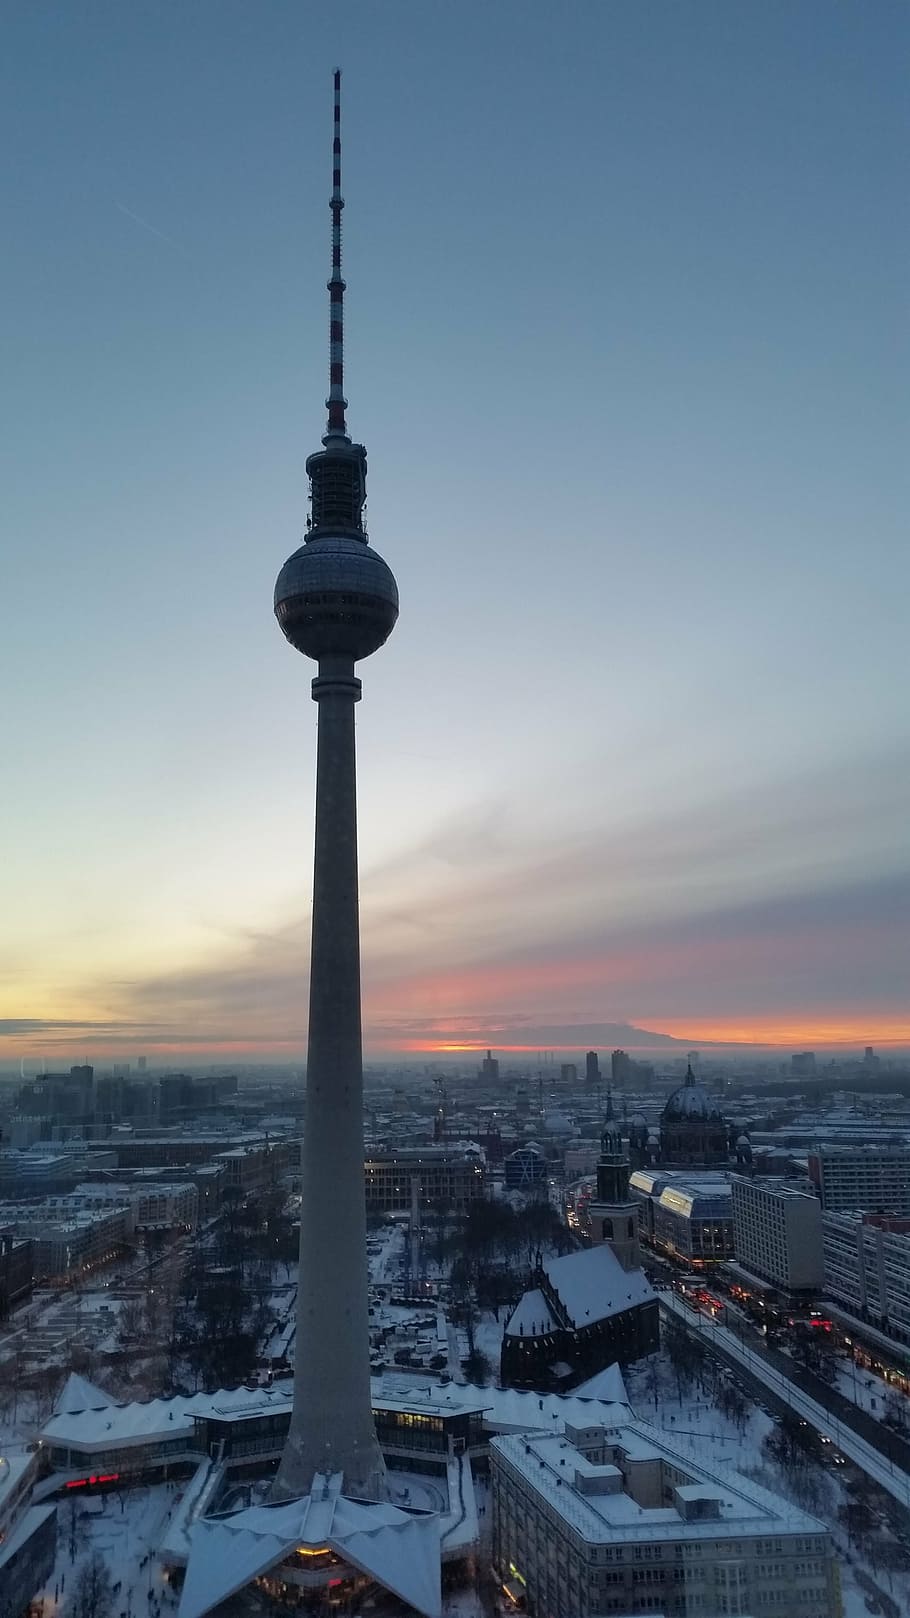 torre cn, berlín, alexanderplatz, torre de televisión, alex, capital, punto de referencia, paisaje urbano, arquitectura, horizonte urbano